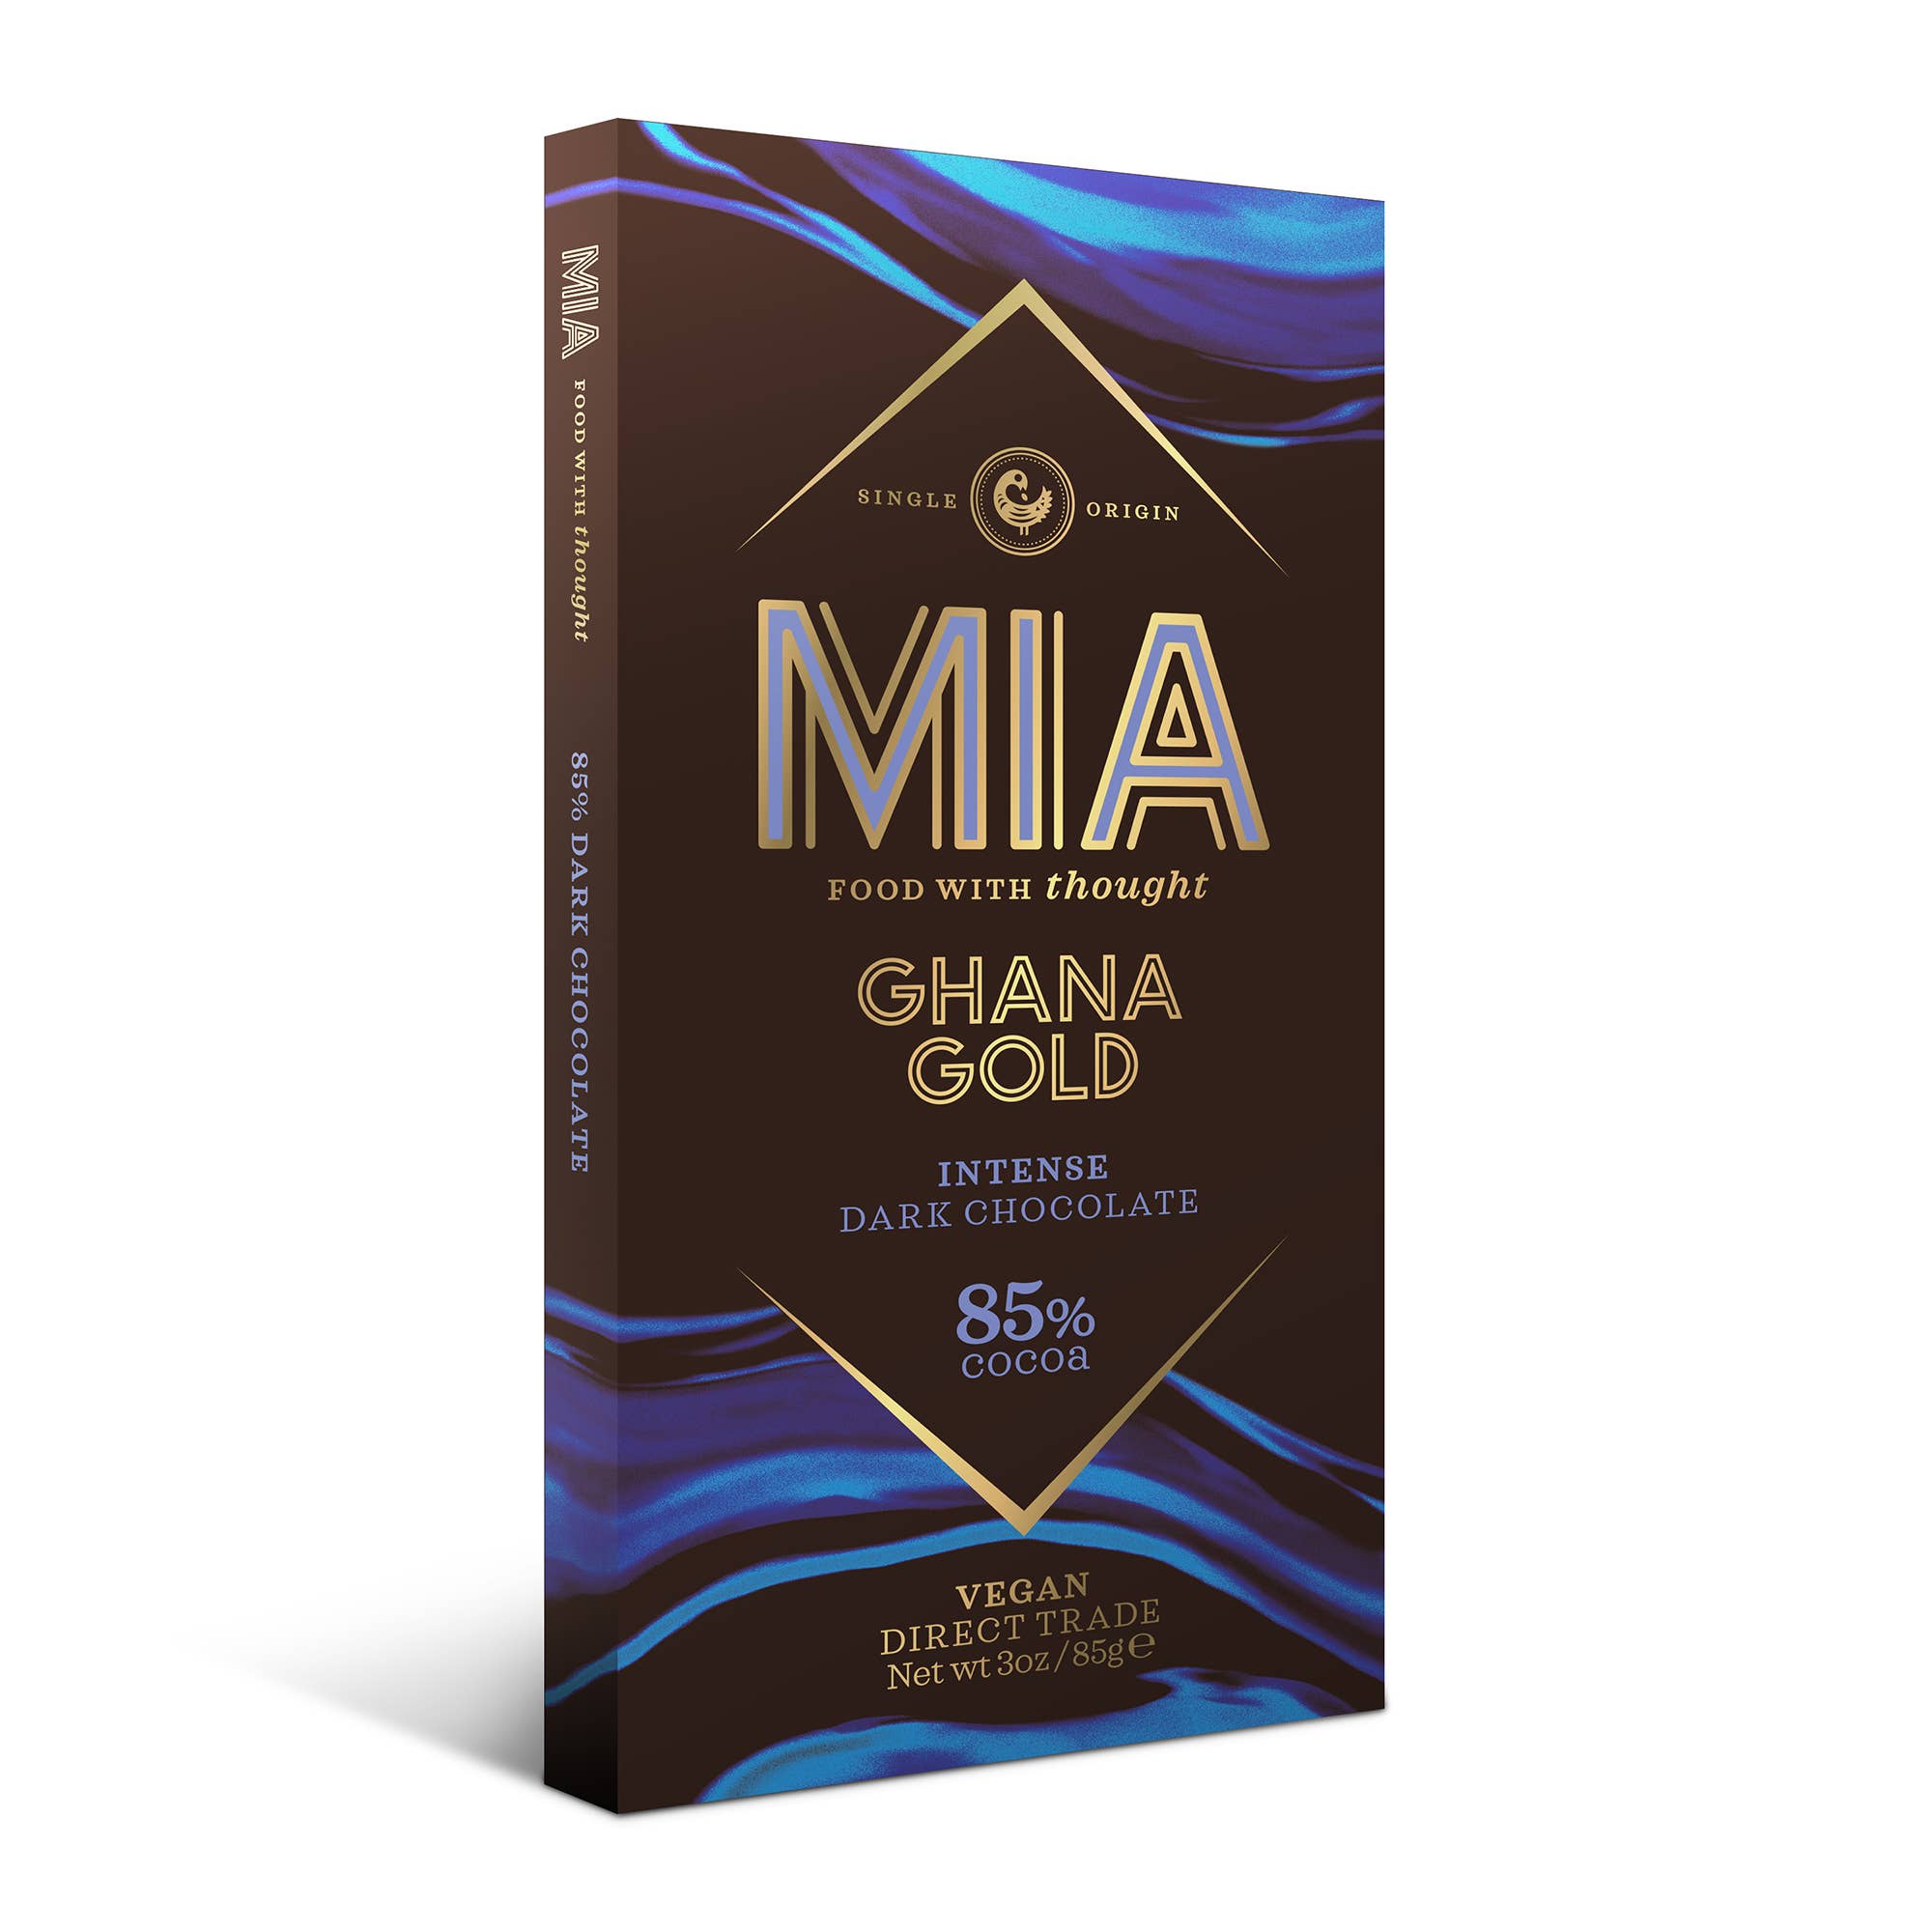 MIA Schokolade Ghana Gold 85% Intensive Zartbitterschokolade